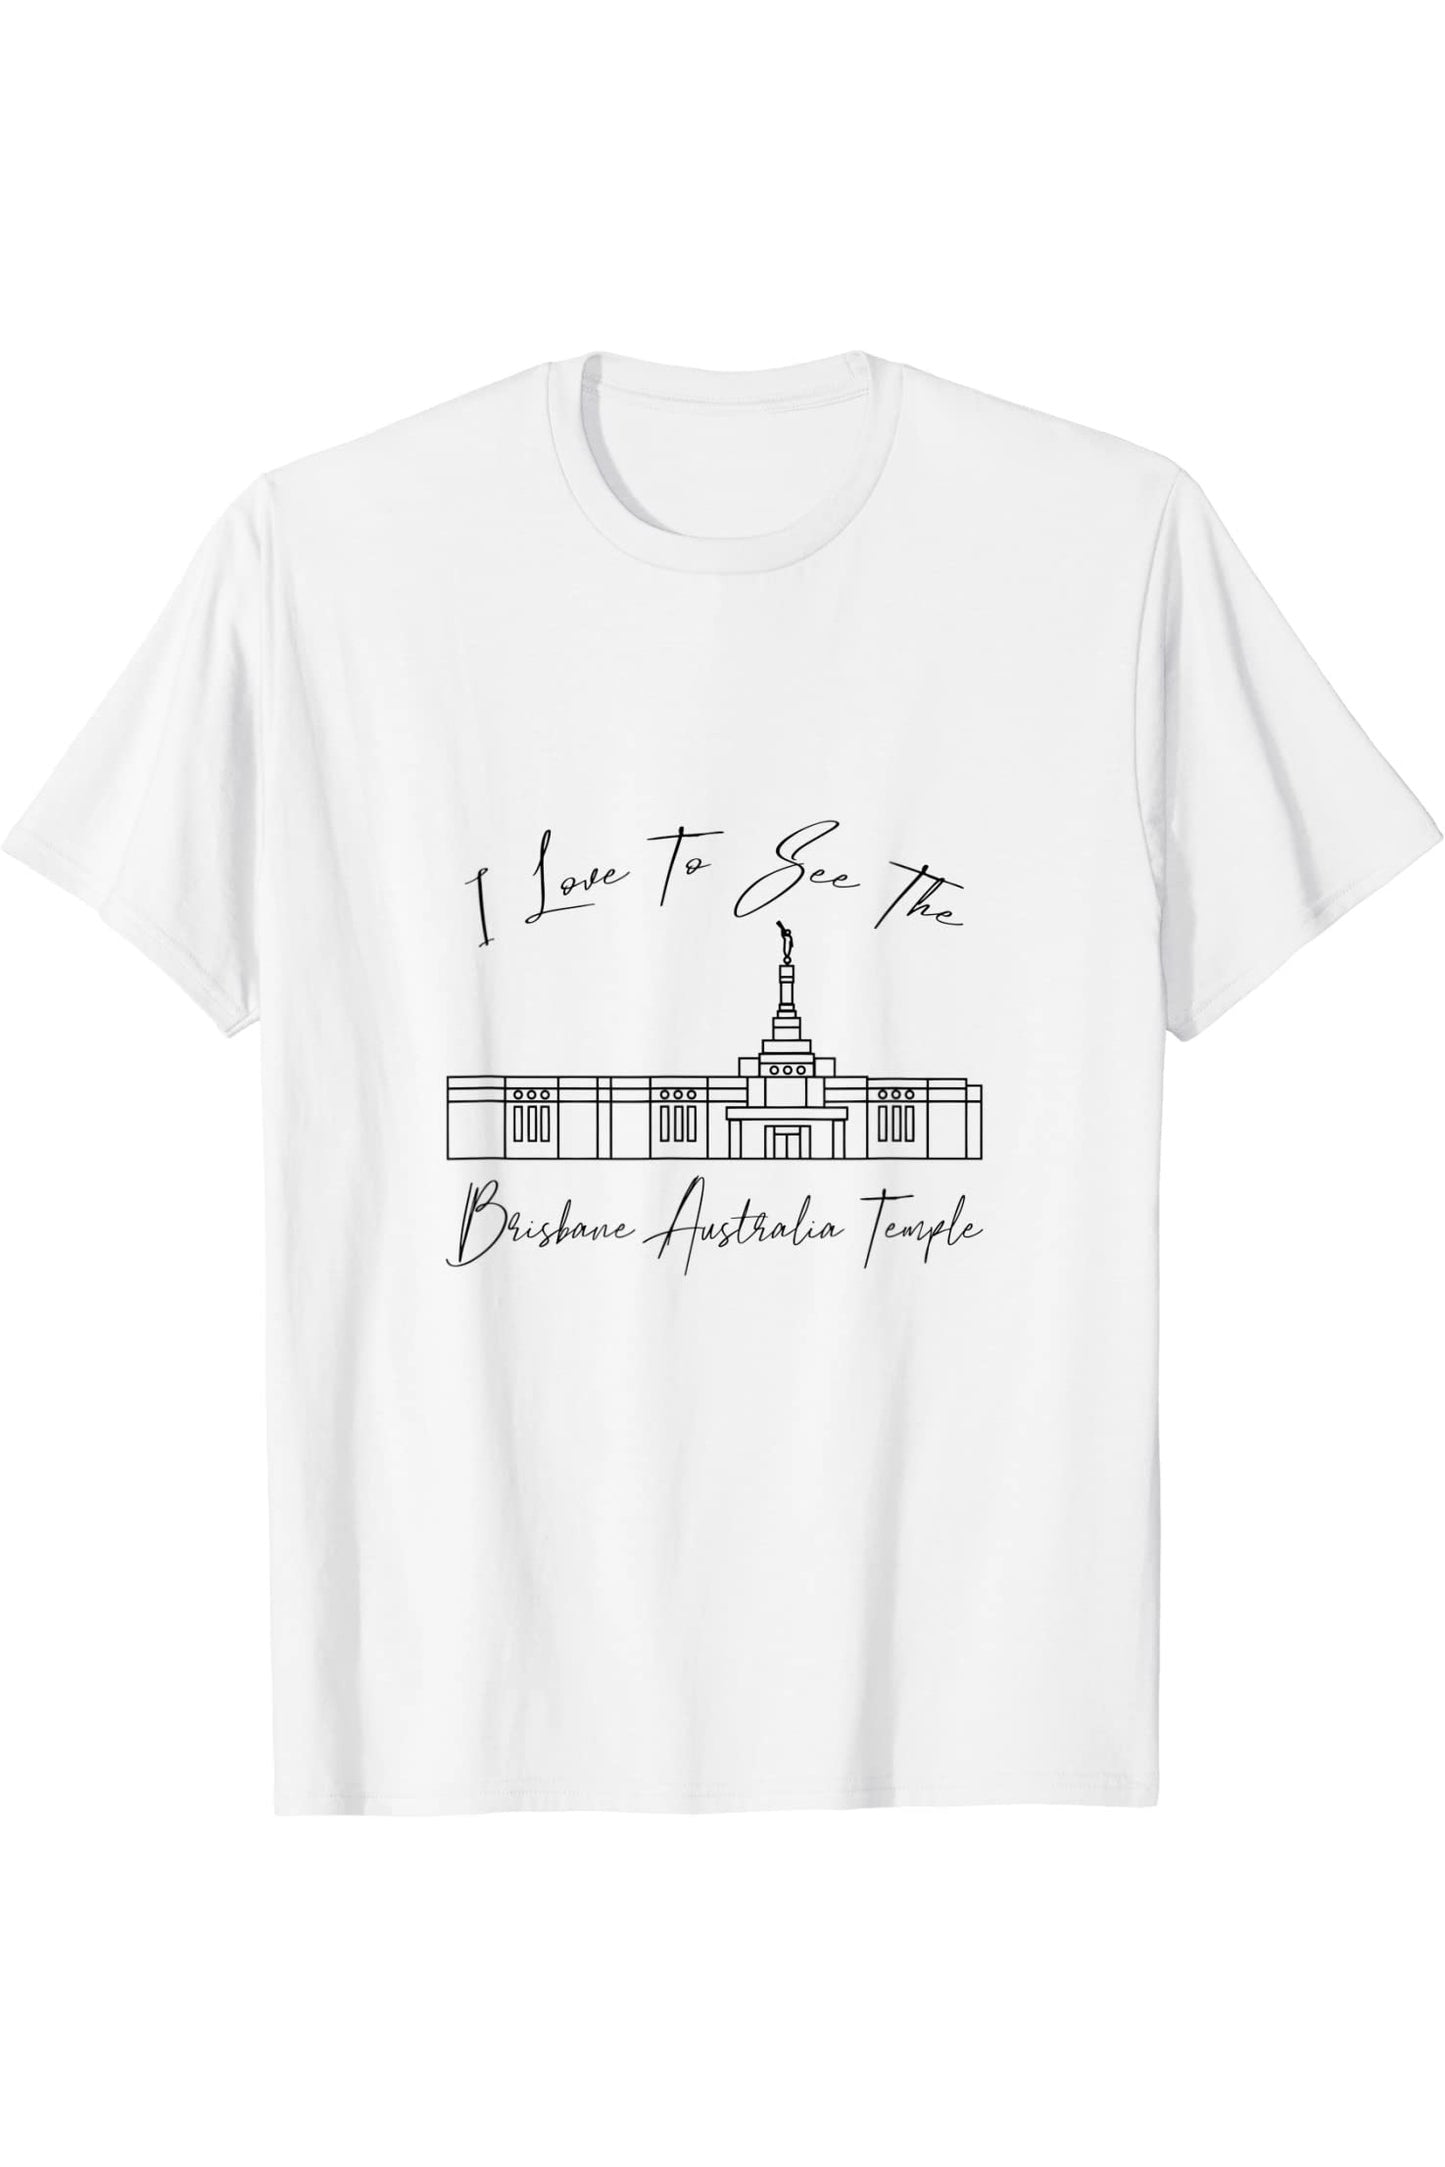 Brisbane Australia Temple T-Shirt - Calligraphy Style (English) US